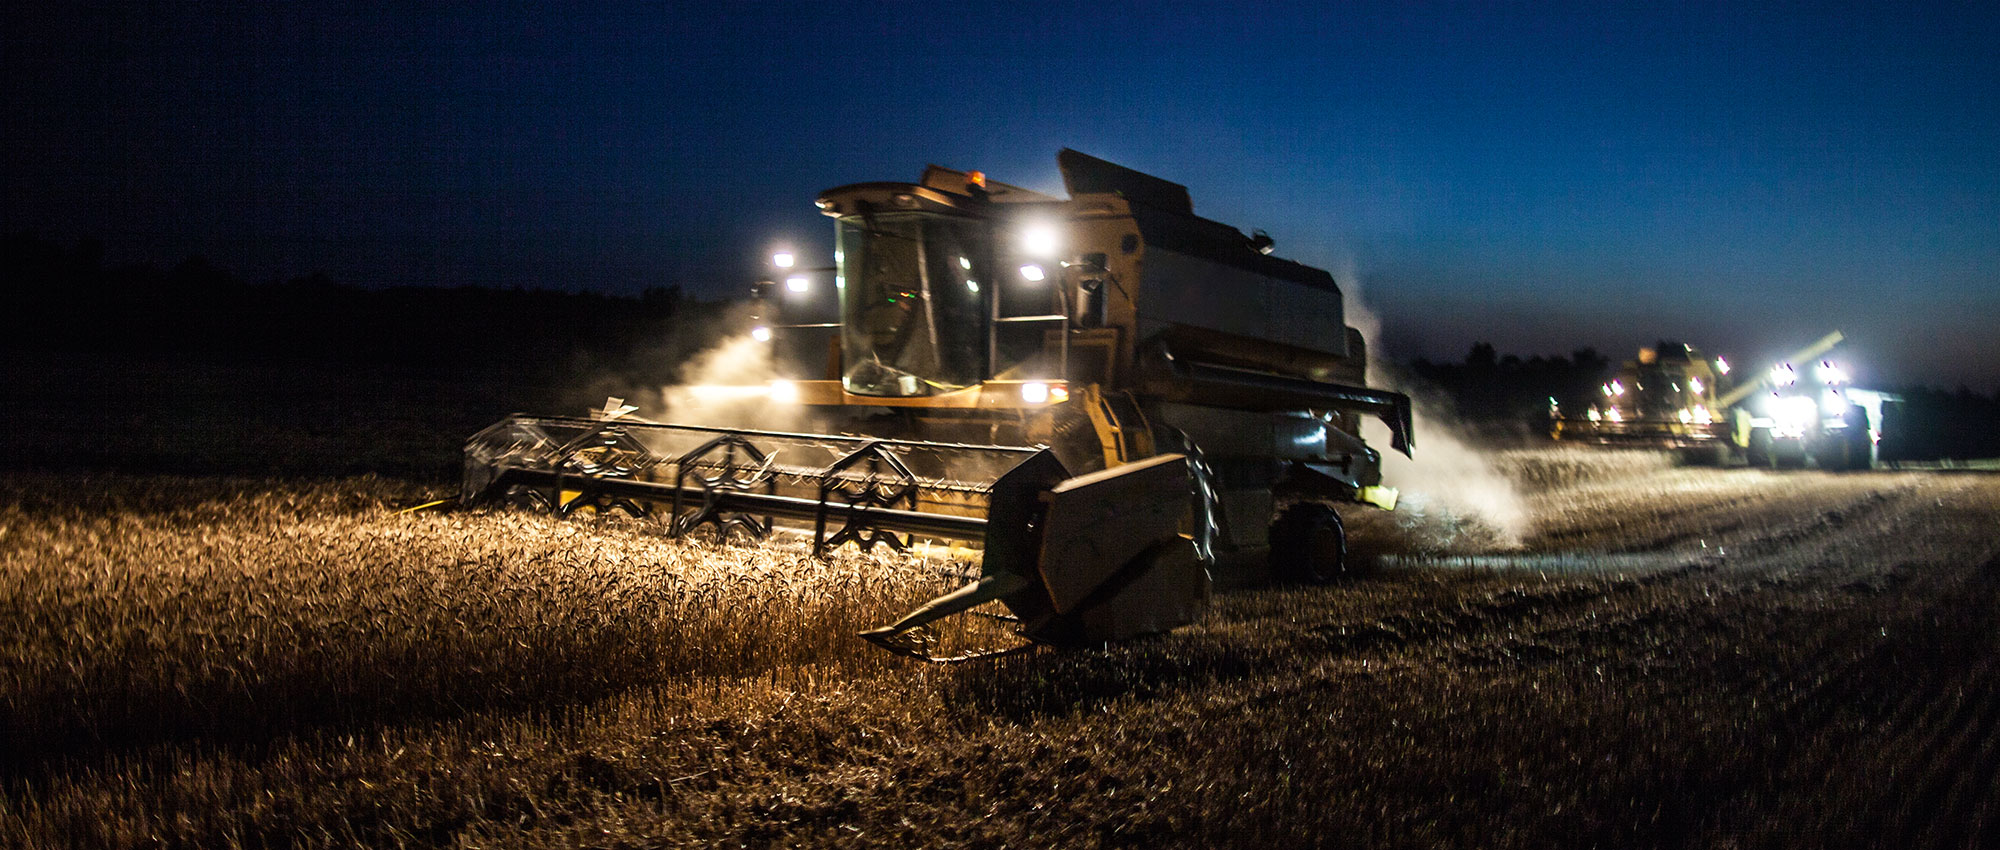 A plow machine plows through field at night